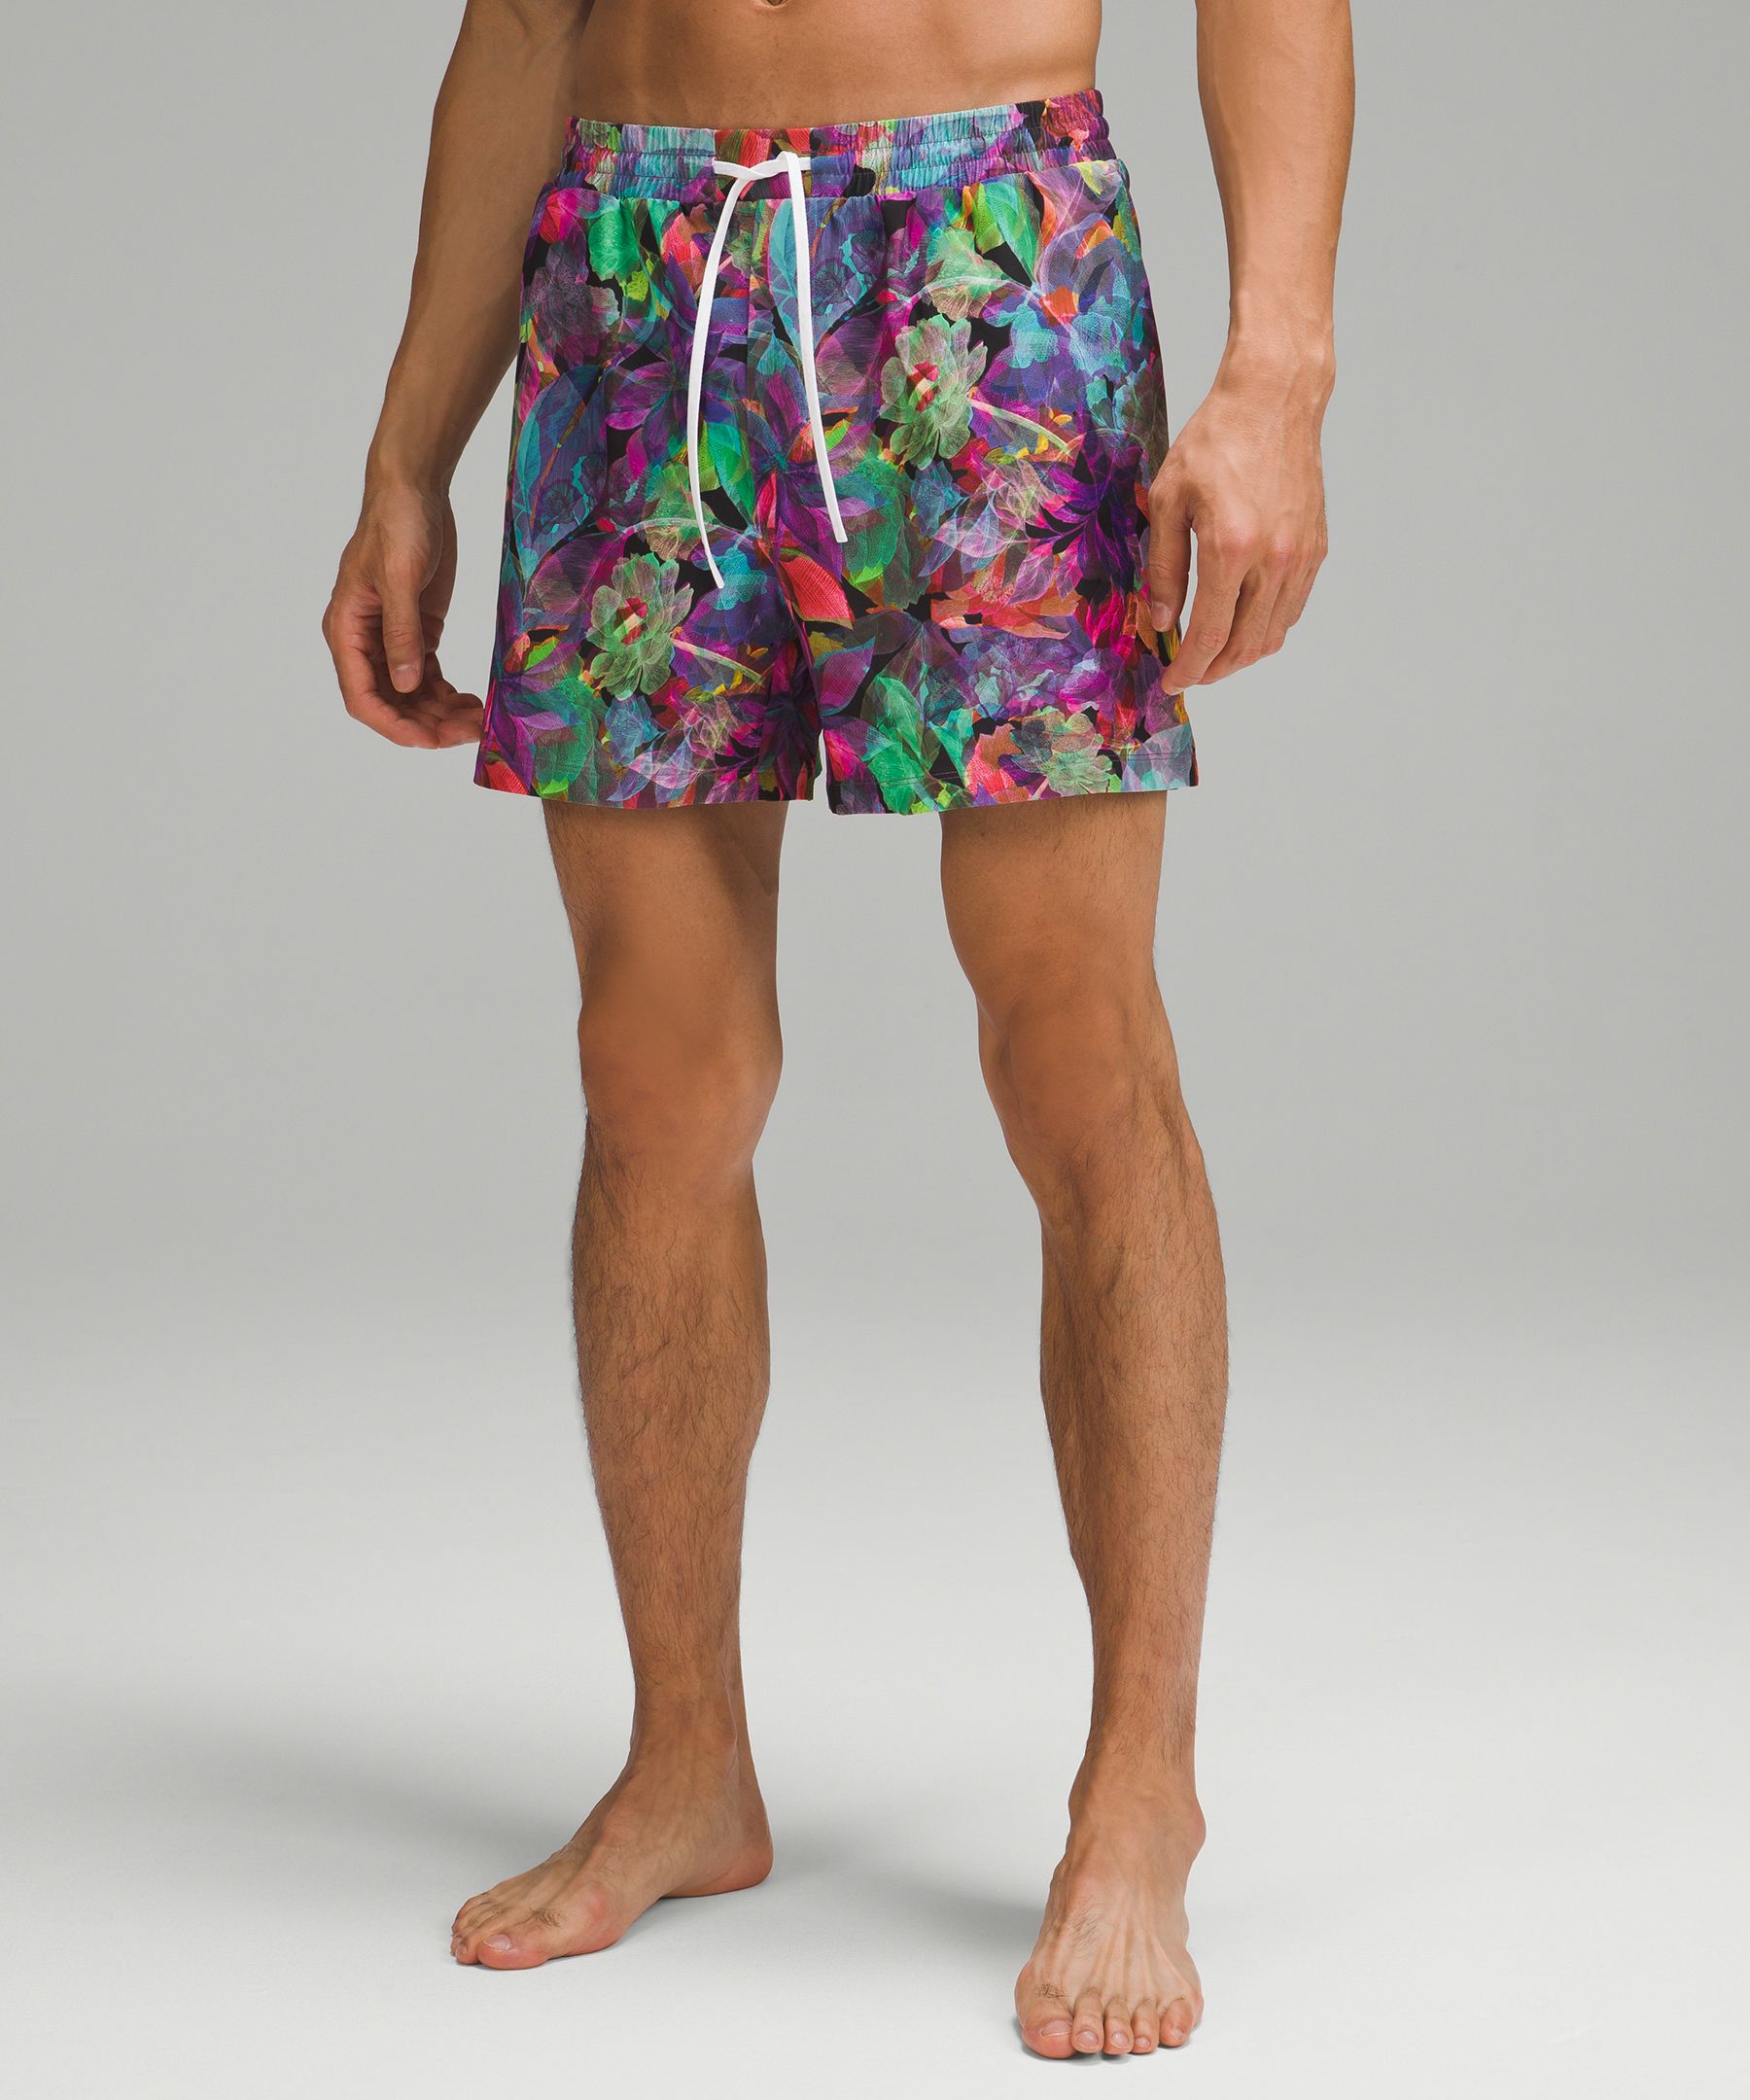 Lululemon Pool Shorts 5" In Vivid Floral Overlay